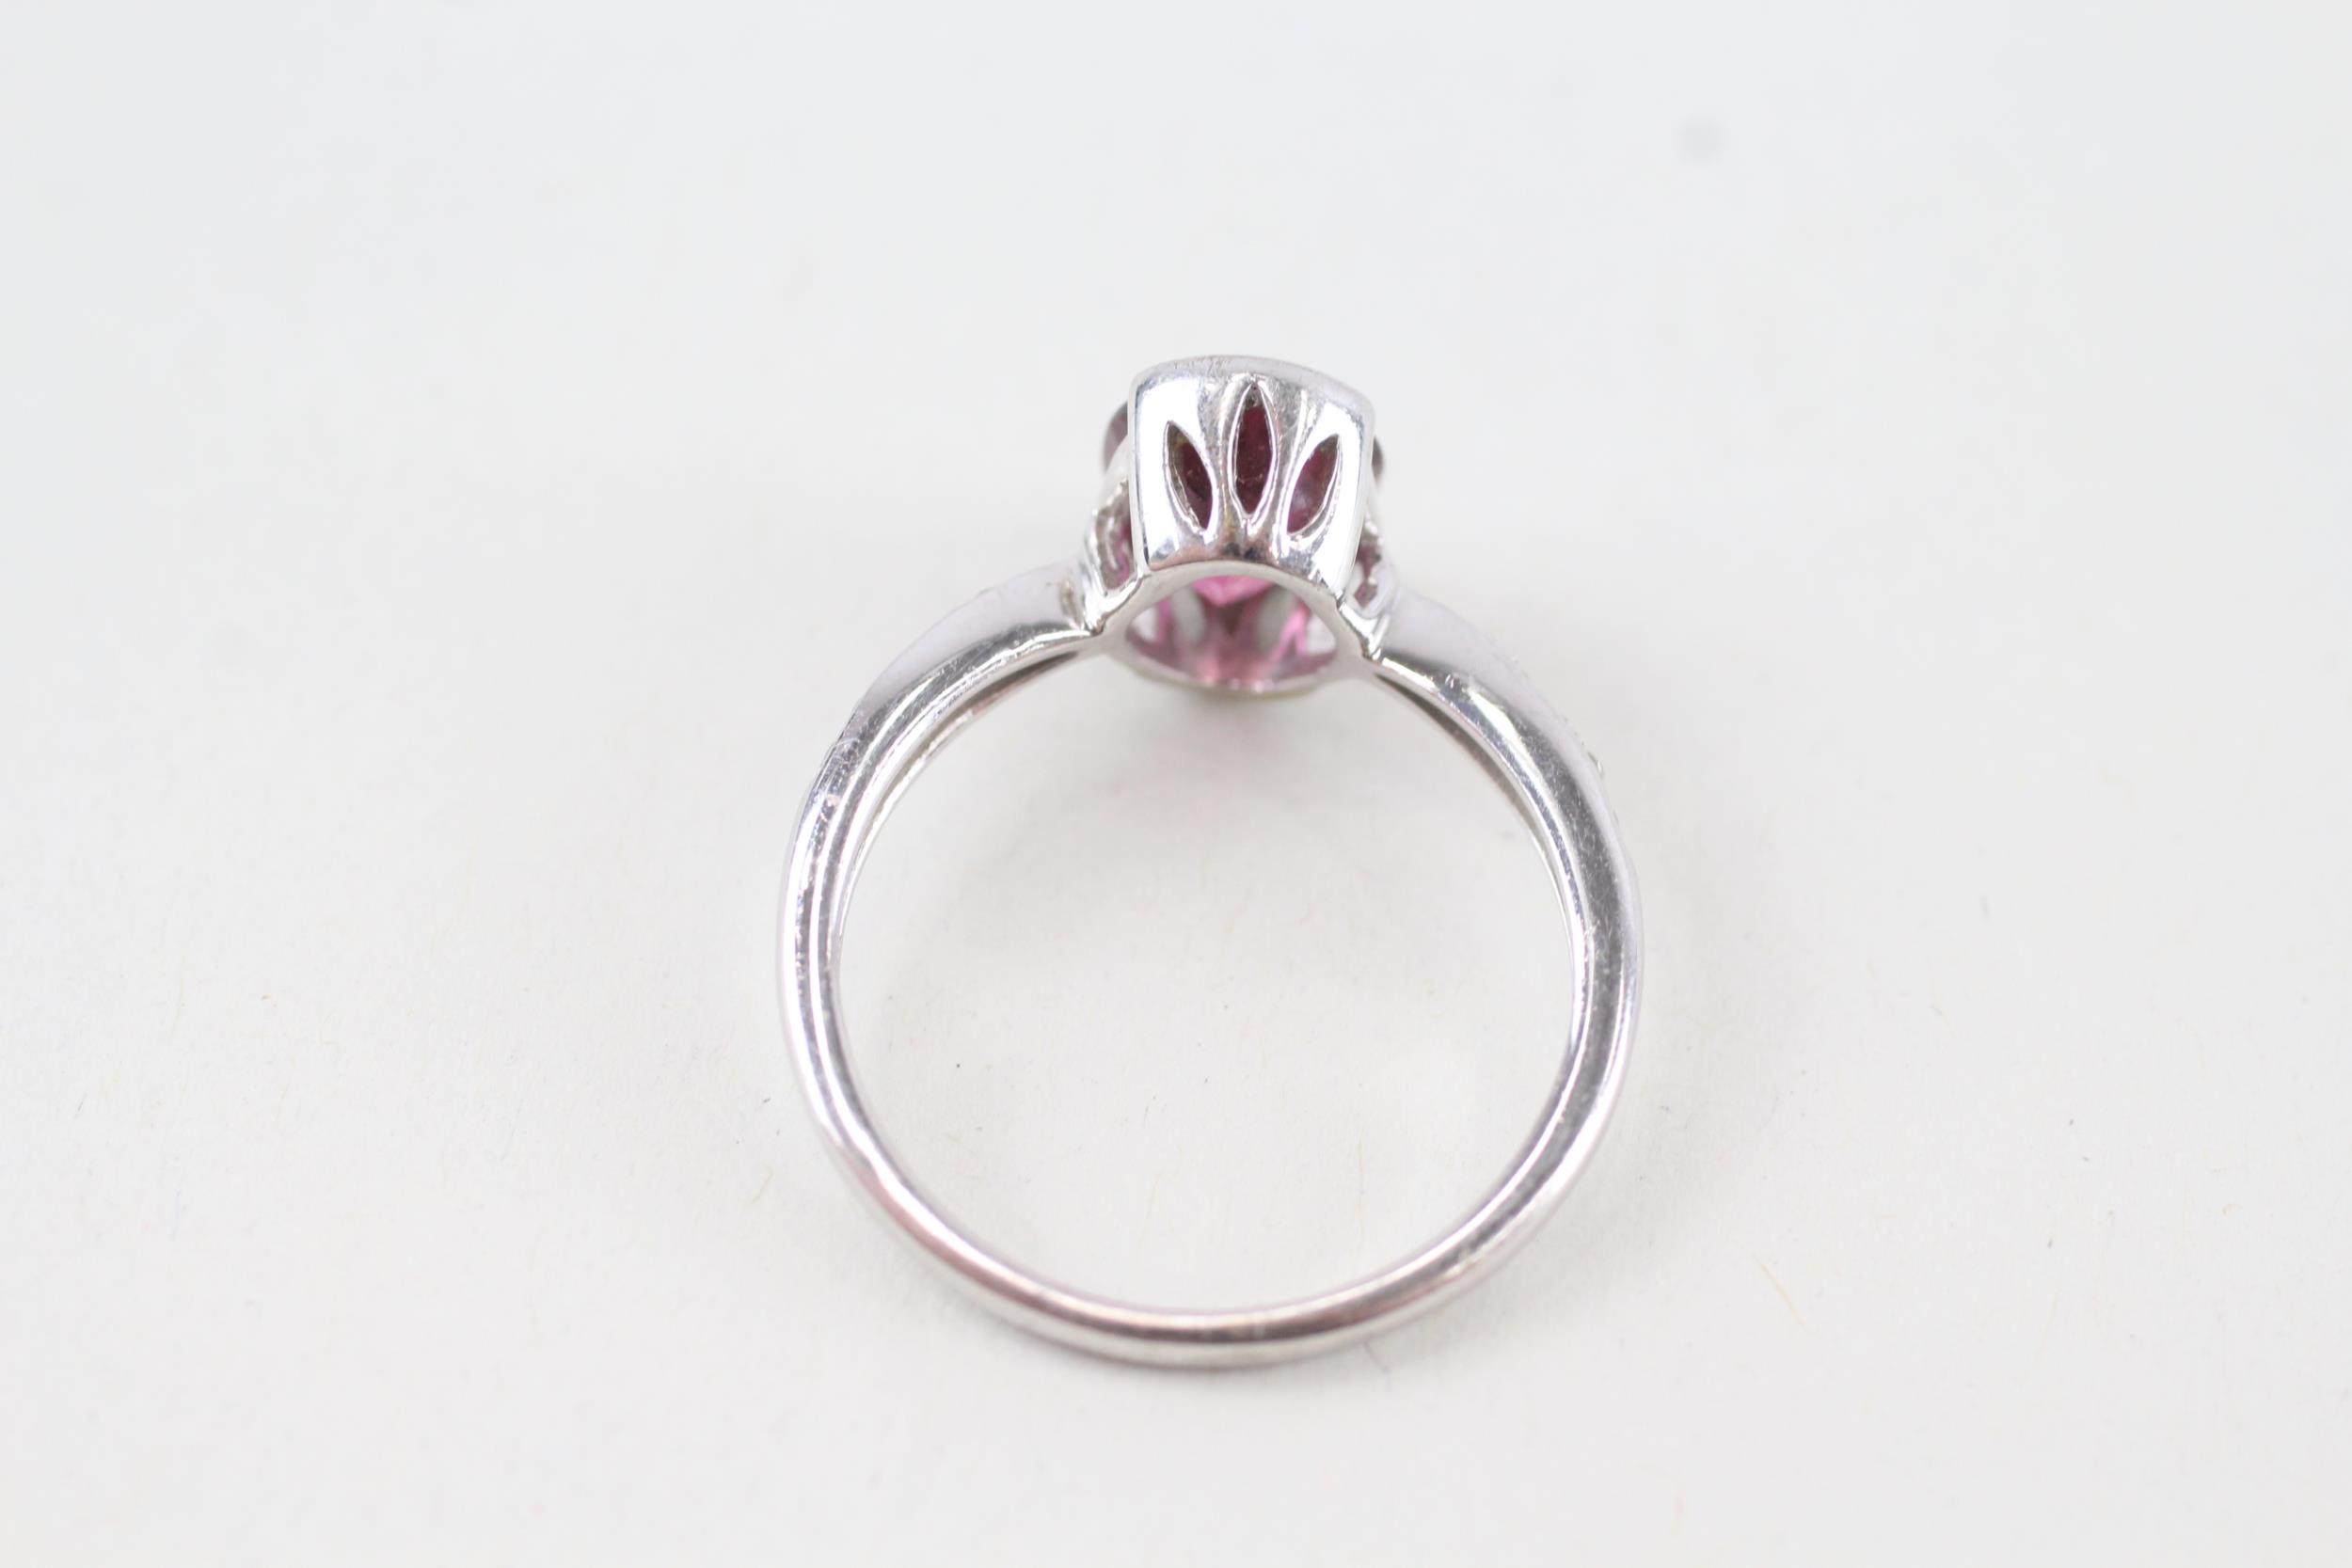 9ct gold oval cut pink tourmaline & diamond ring (2.8g) Size N - Image 4 of 4